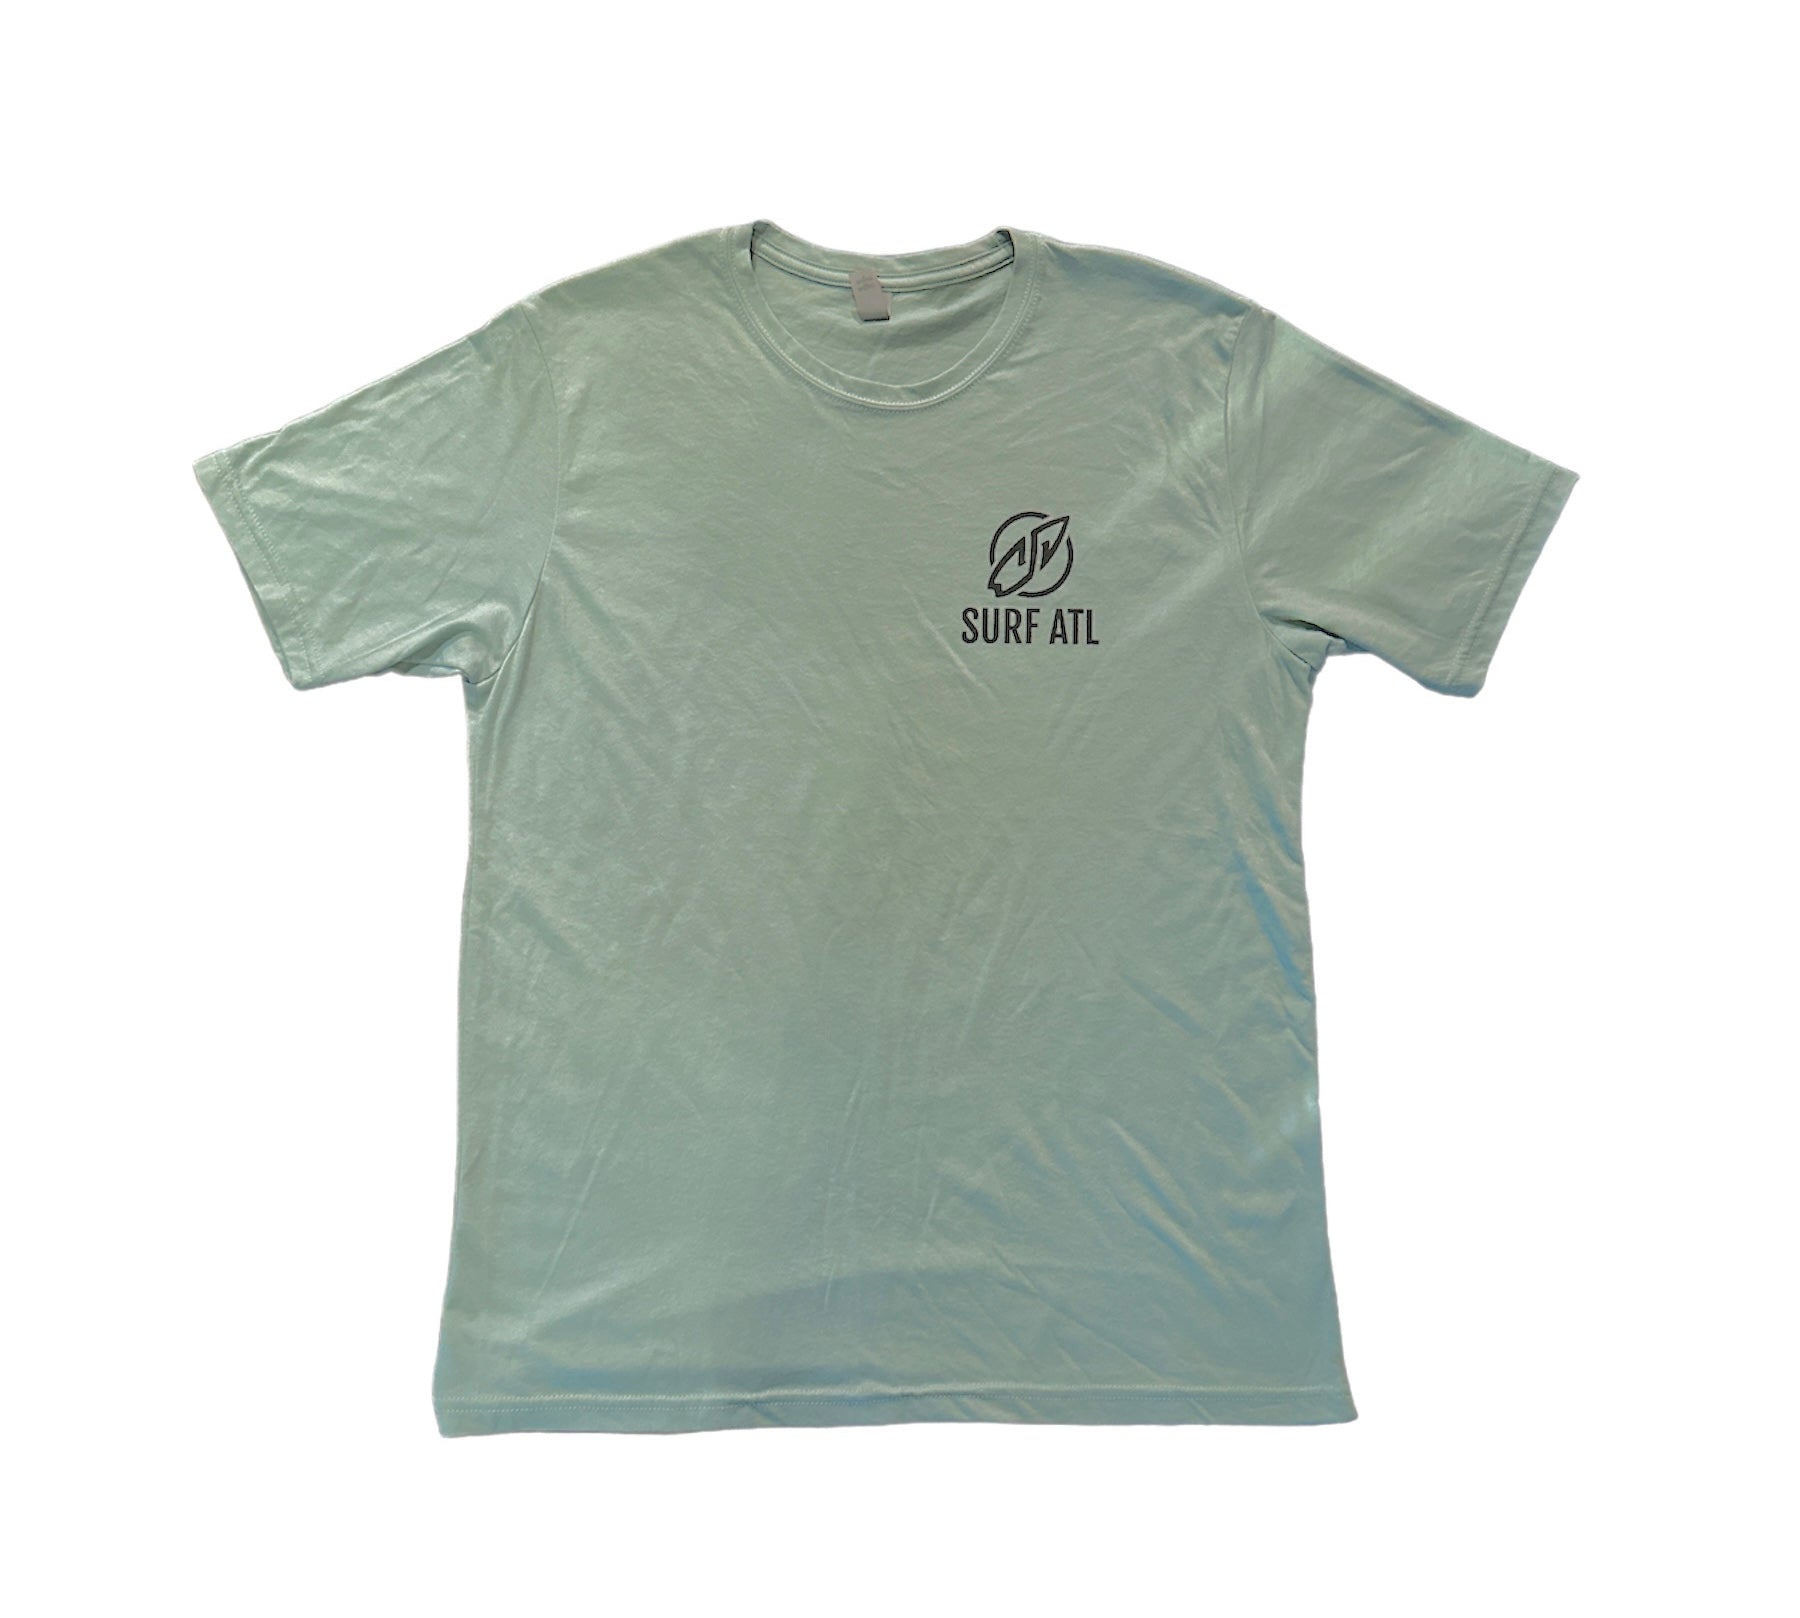 Surf ATL Mint Unisex Shirt